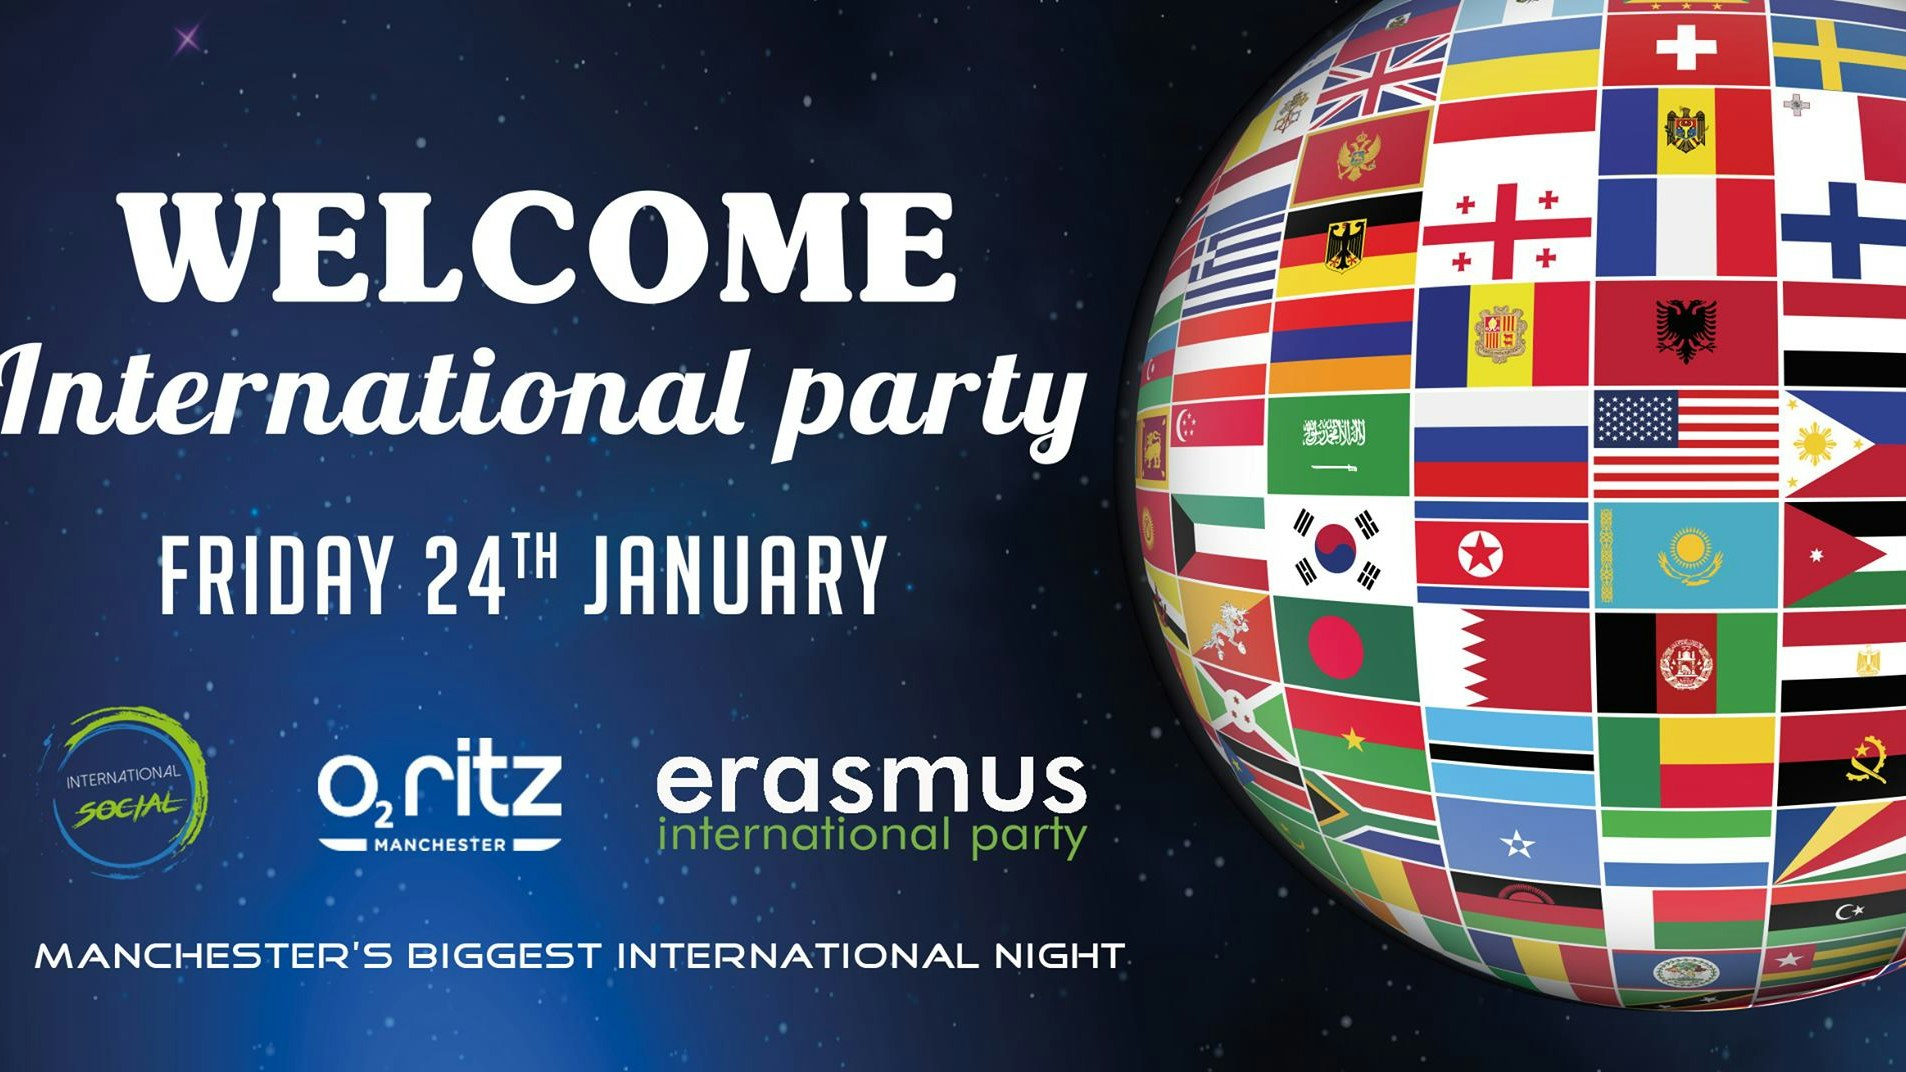 Erasmus Manchester- Welcome International Party 2020